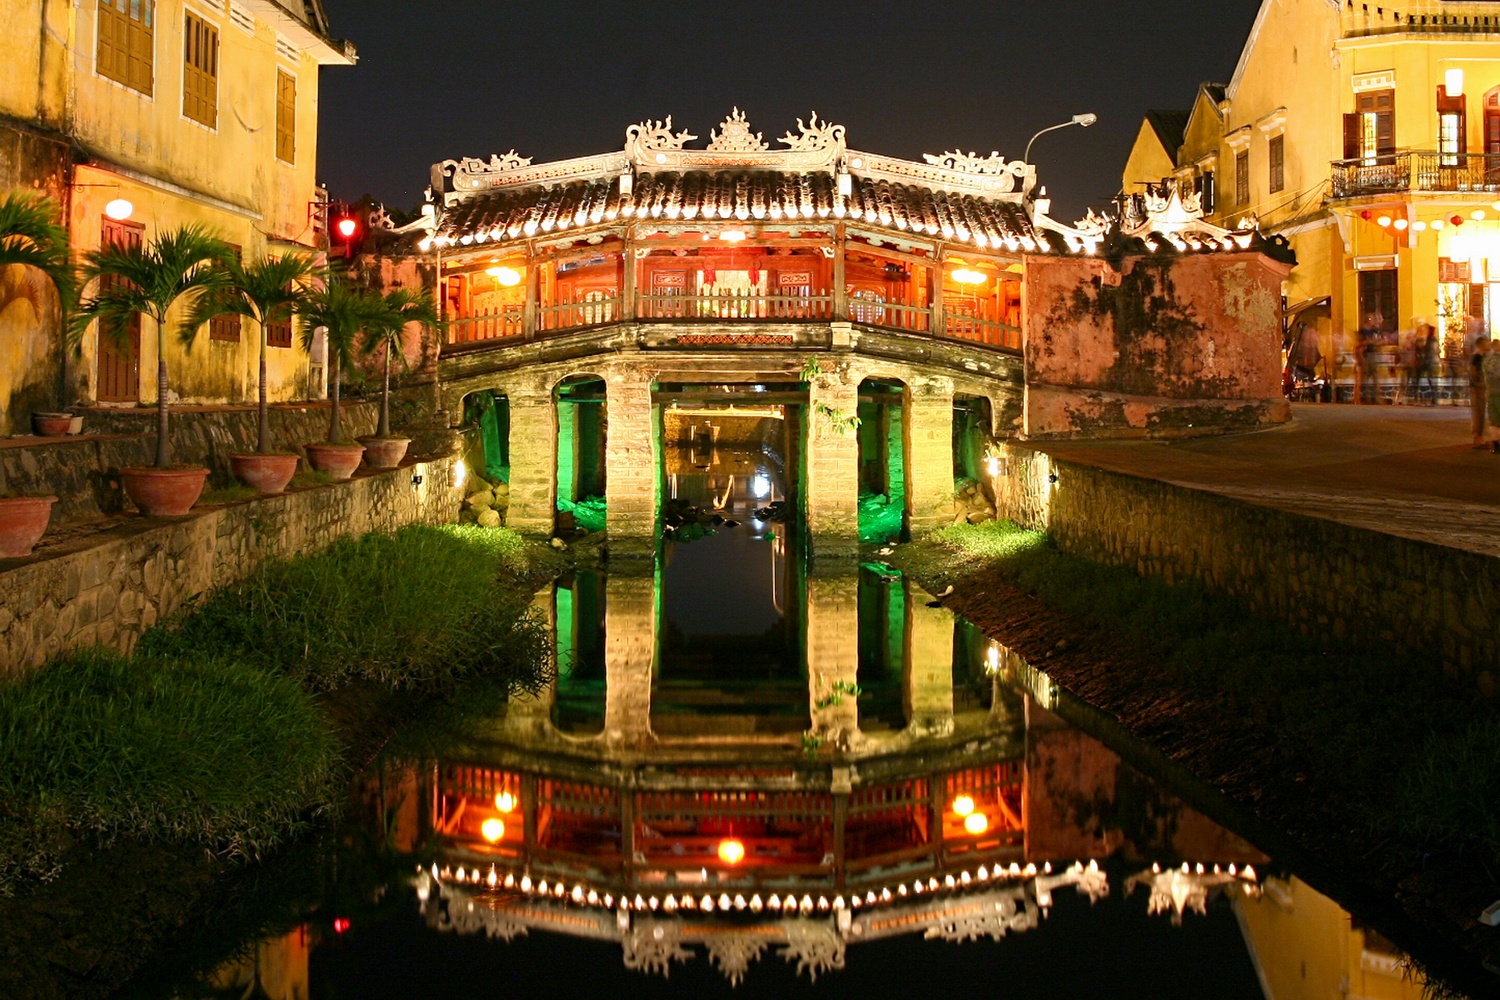 The Japanese Pagoda Bridge is lit up at night